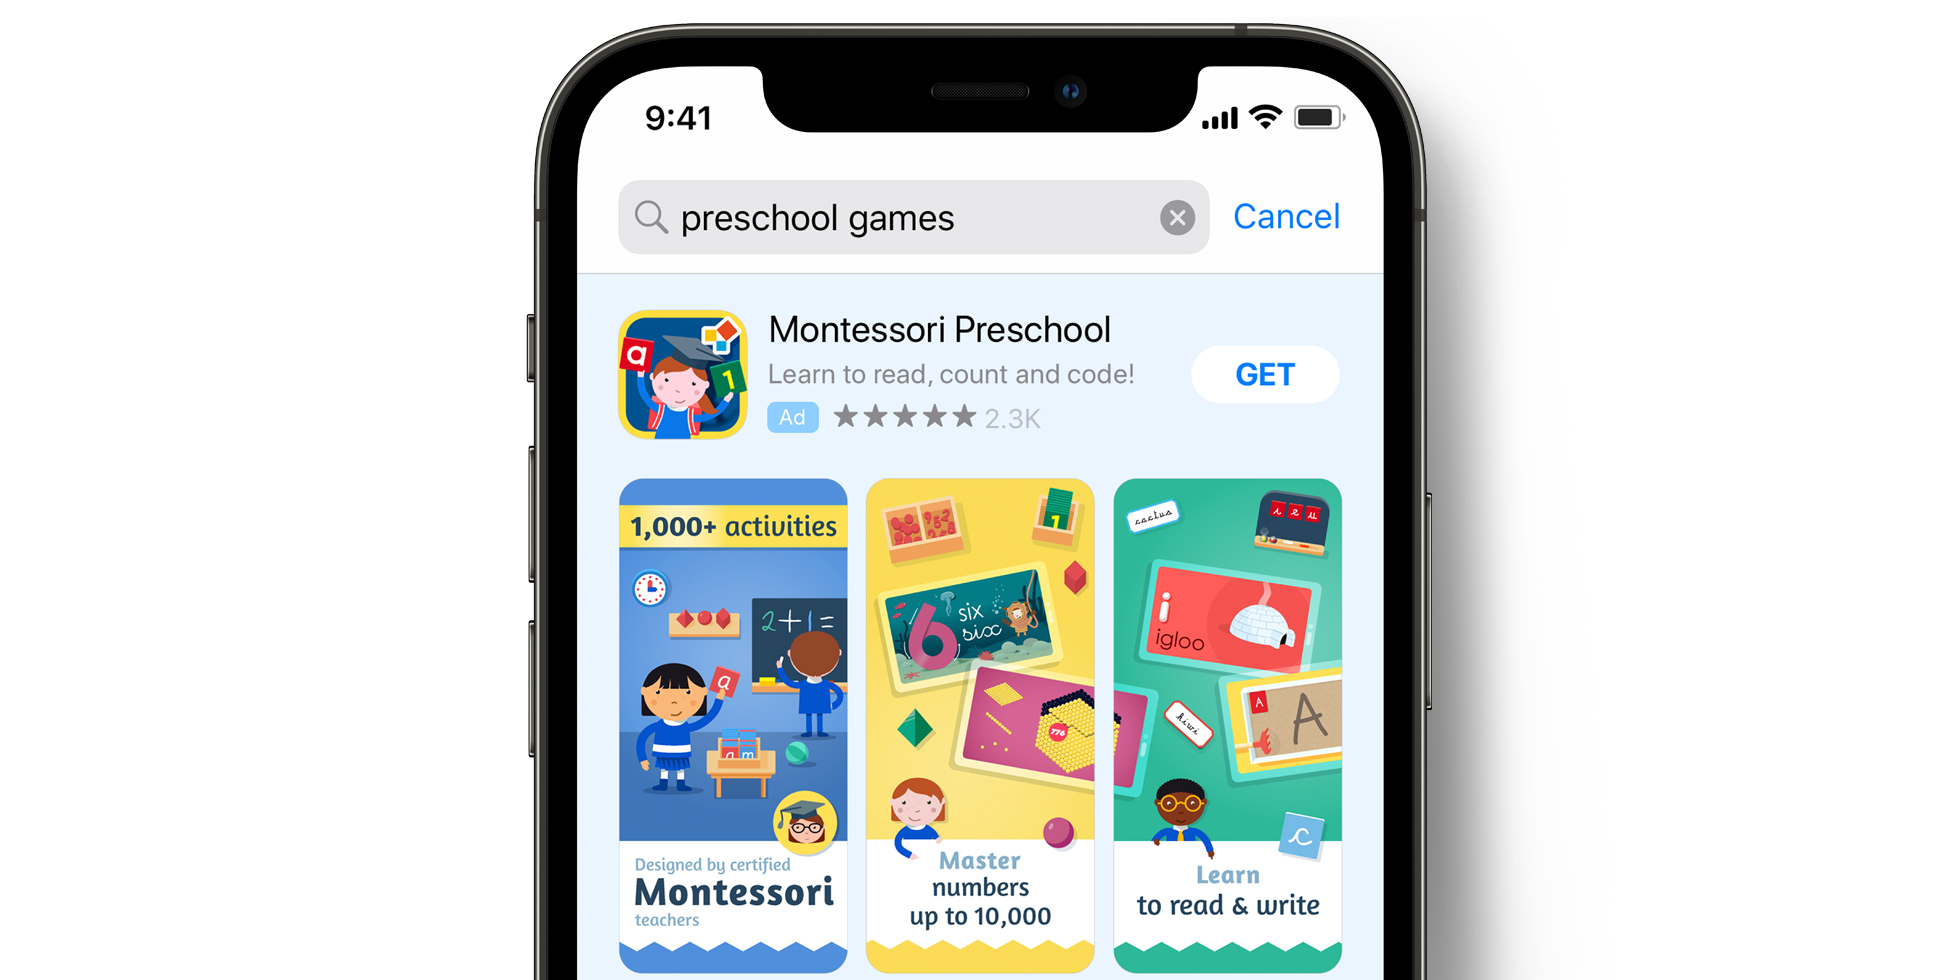 Montessori Preschool Anzeige im App Store